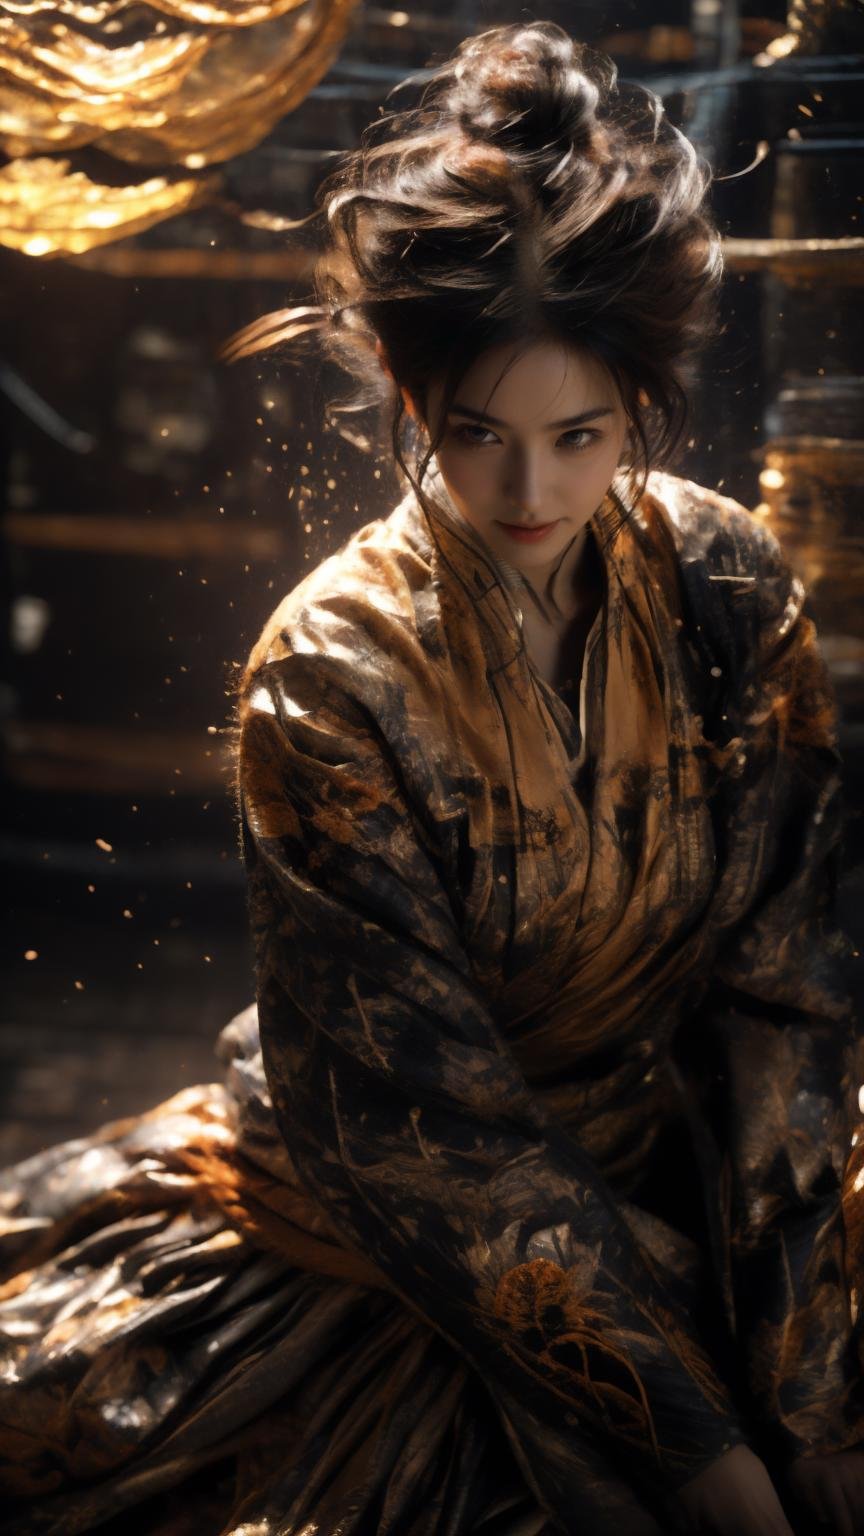 masterpiece,best quality,highest detail,detailed background,insane details,intricate,aesthetic,1girl,Samurai girl,full body,light smile,charming,20yo,Sunset orange hair,half updo hair.Mohawk,Floral embroidered mesh overlay dress,Drape,Sitting,<lora:add_detail:1>,<lora:liujin_20231009043509:0.7>,<lora:Samurai girl:0.8>,